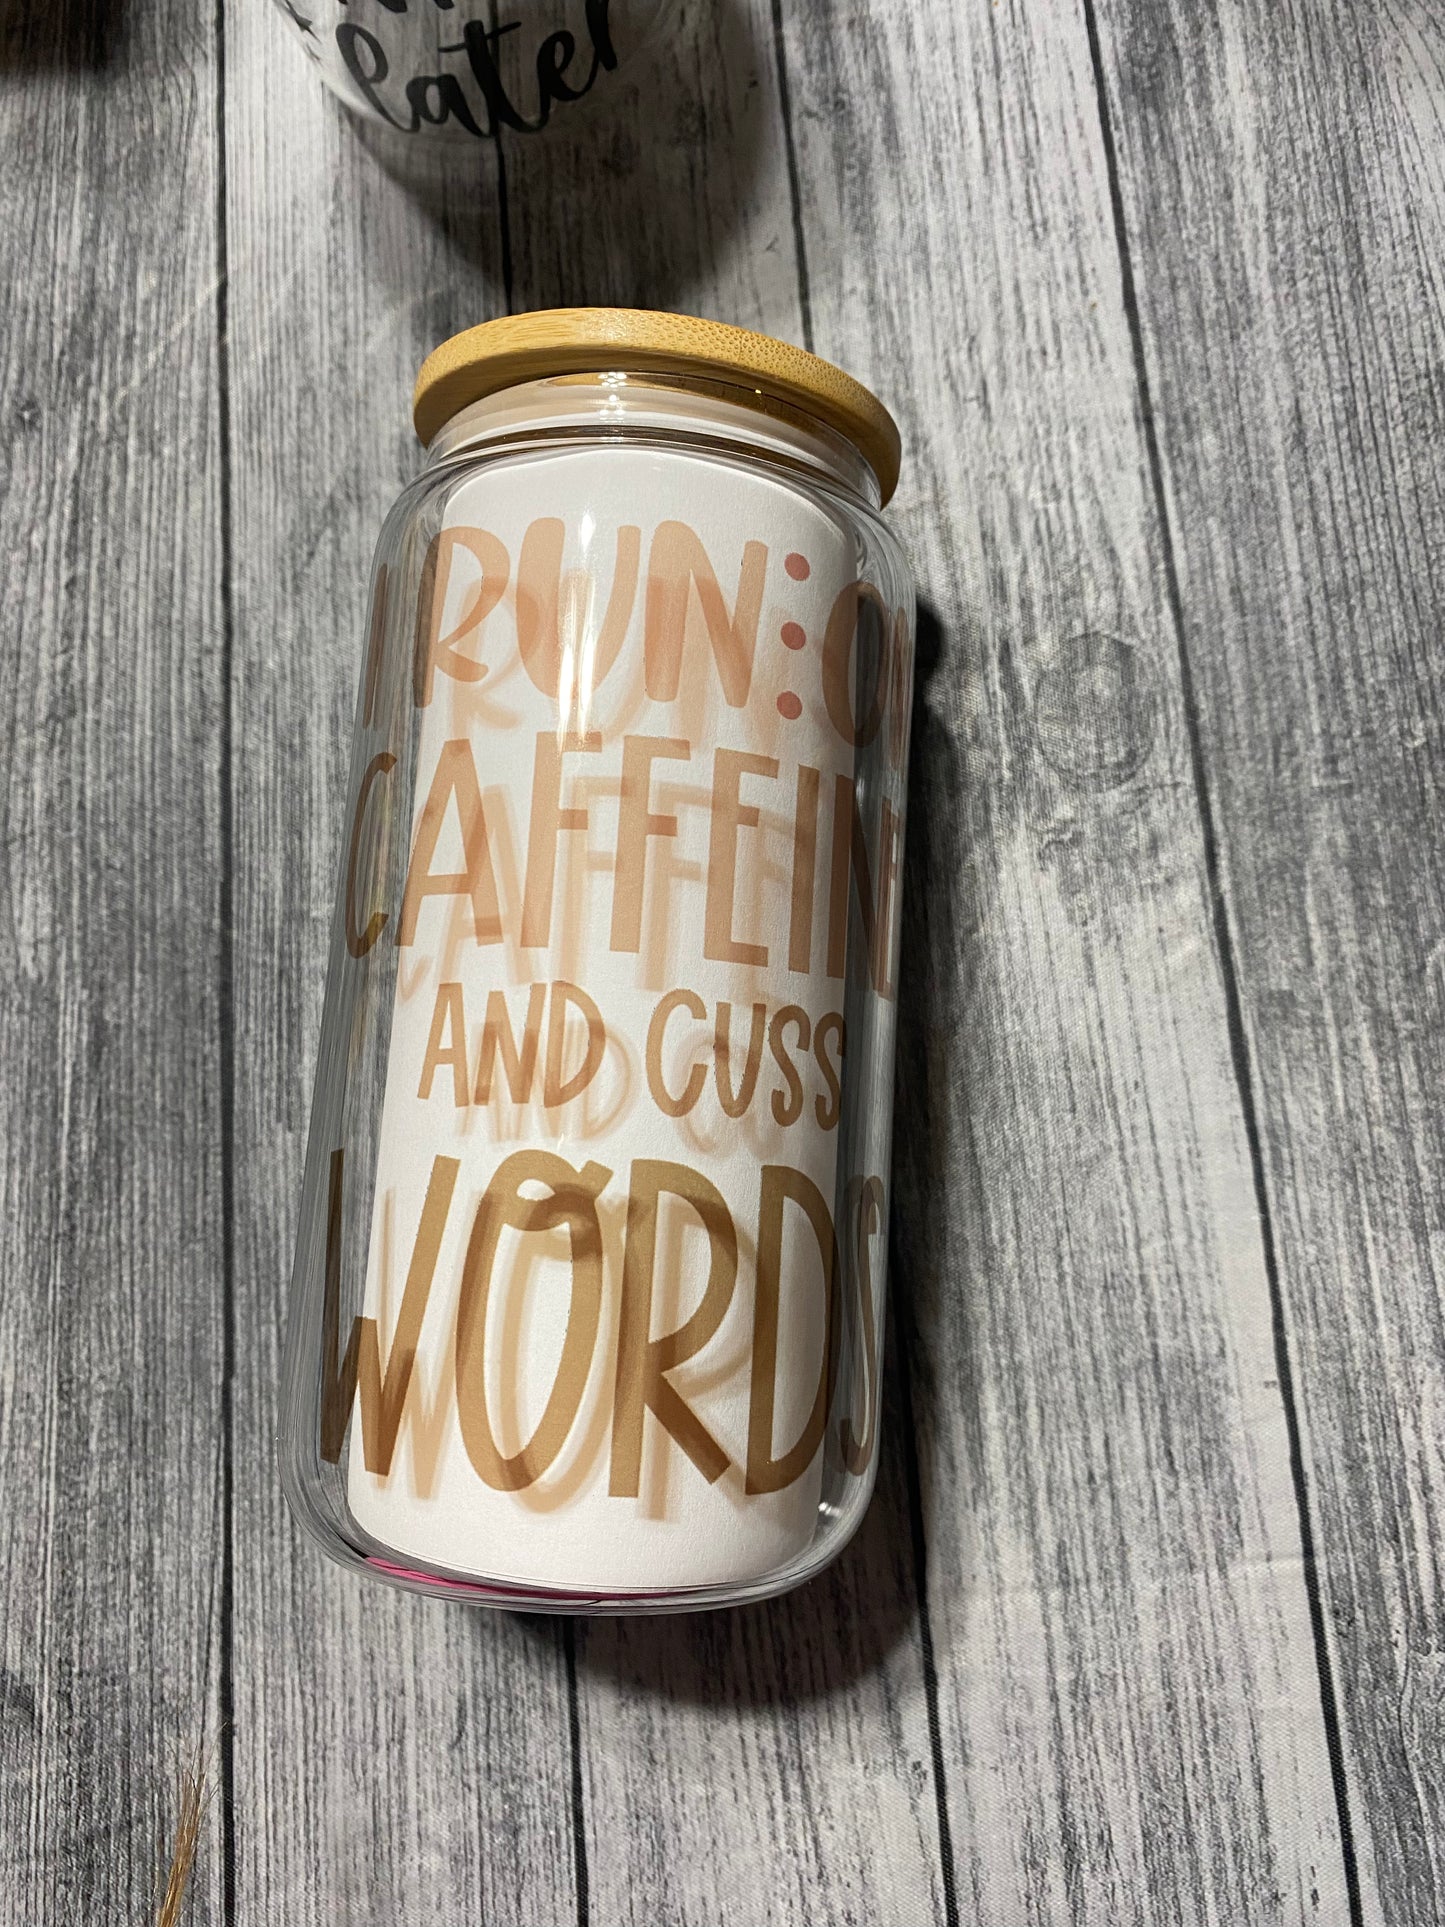 Caffeine and cuss words